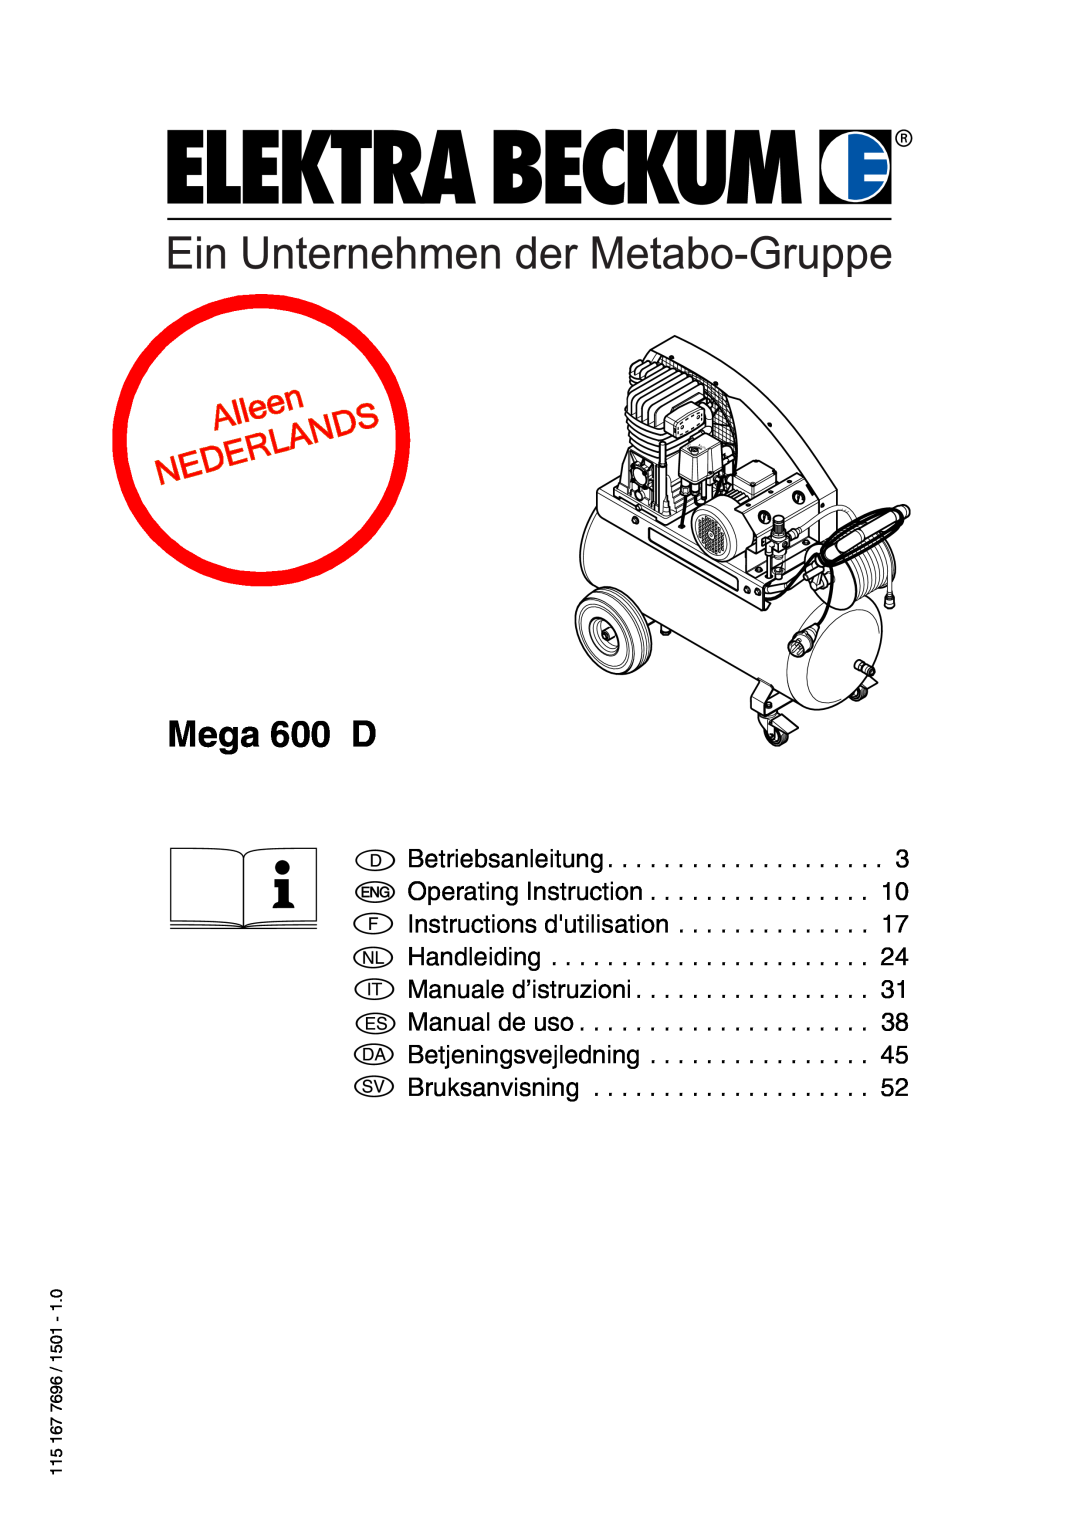 Elektra Beckum Mega 600 D manual Betriebsanleitung Operating Instruction Instructions dutilisation, Bruksanvisning, Auto 